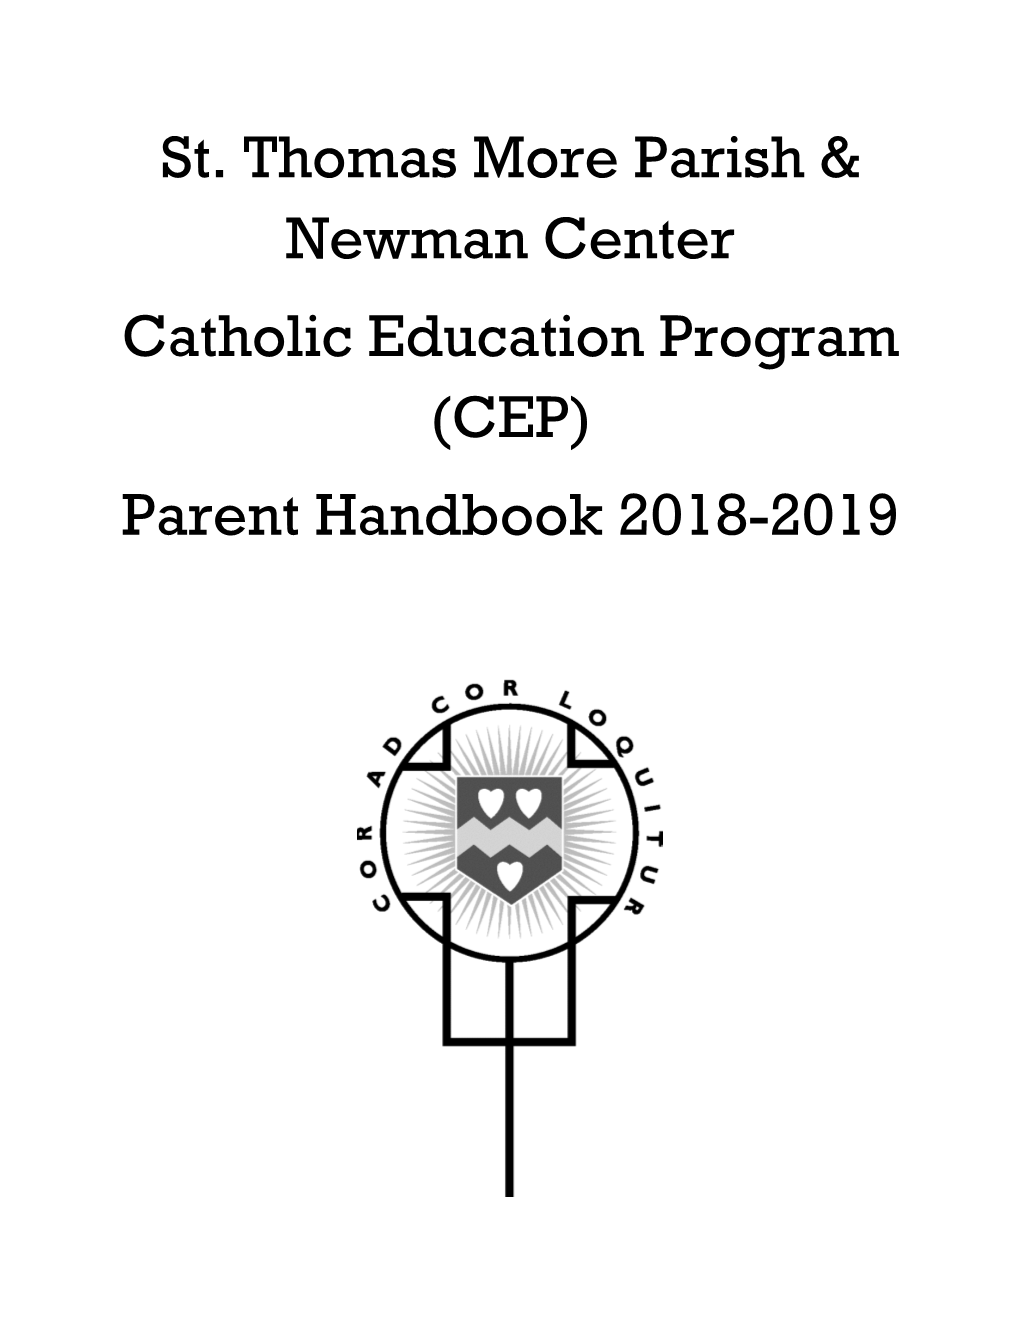 CEP) Parent Handbook 2018-2019